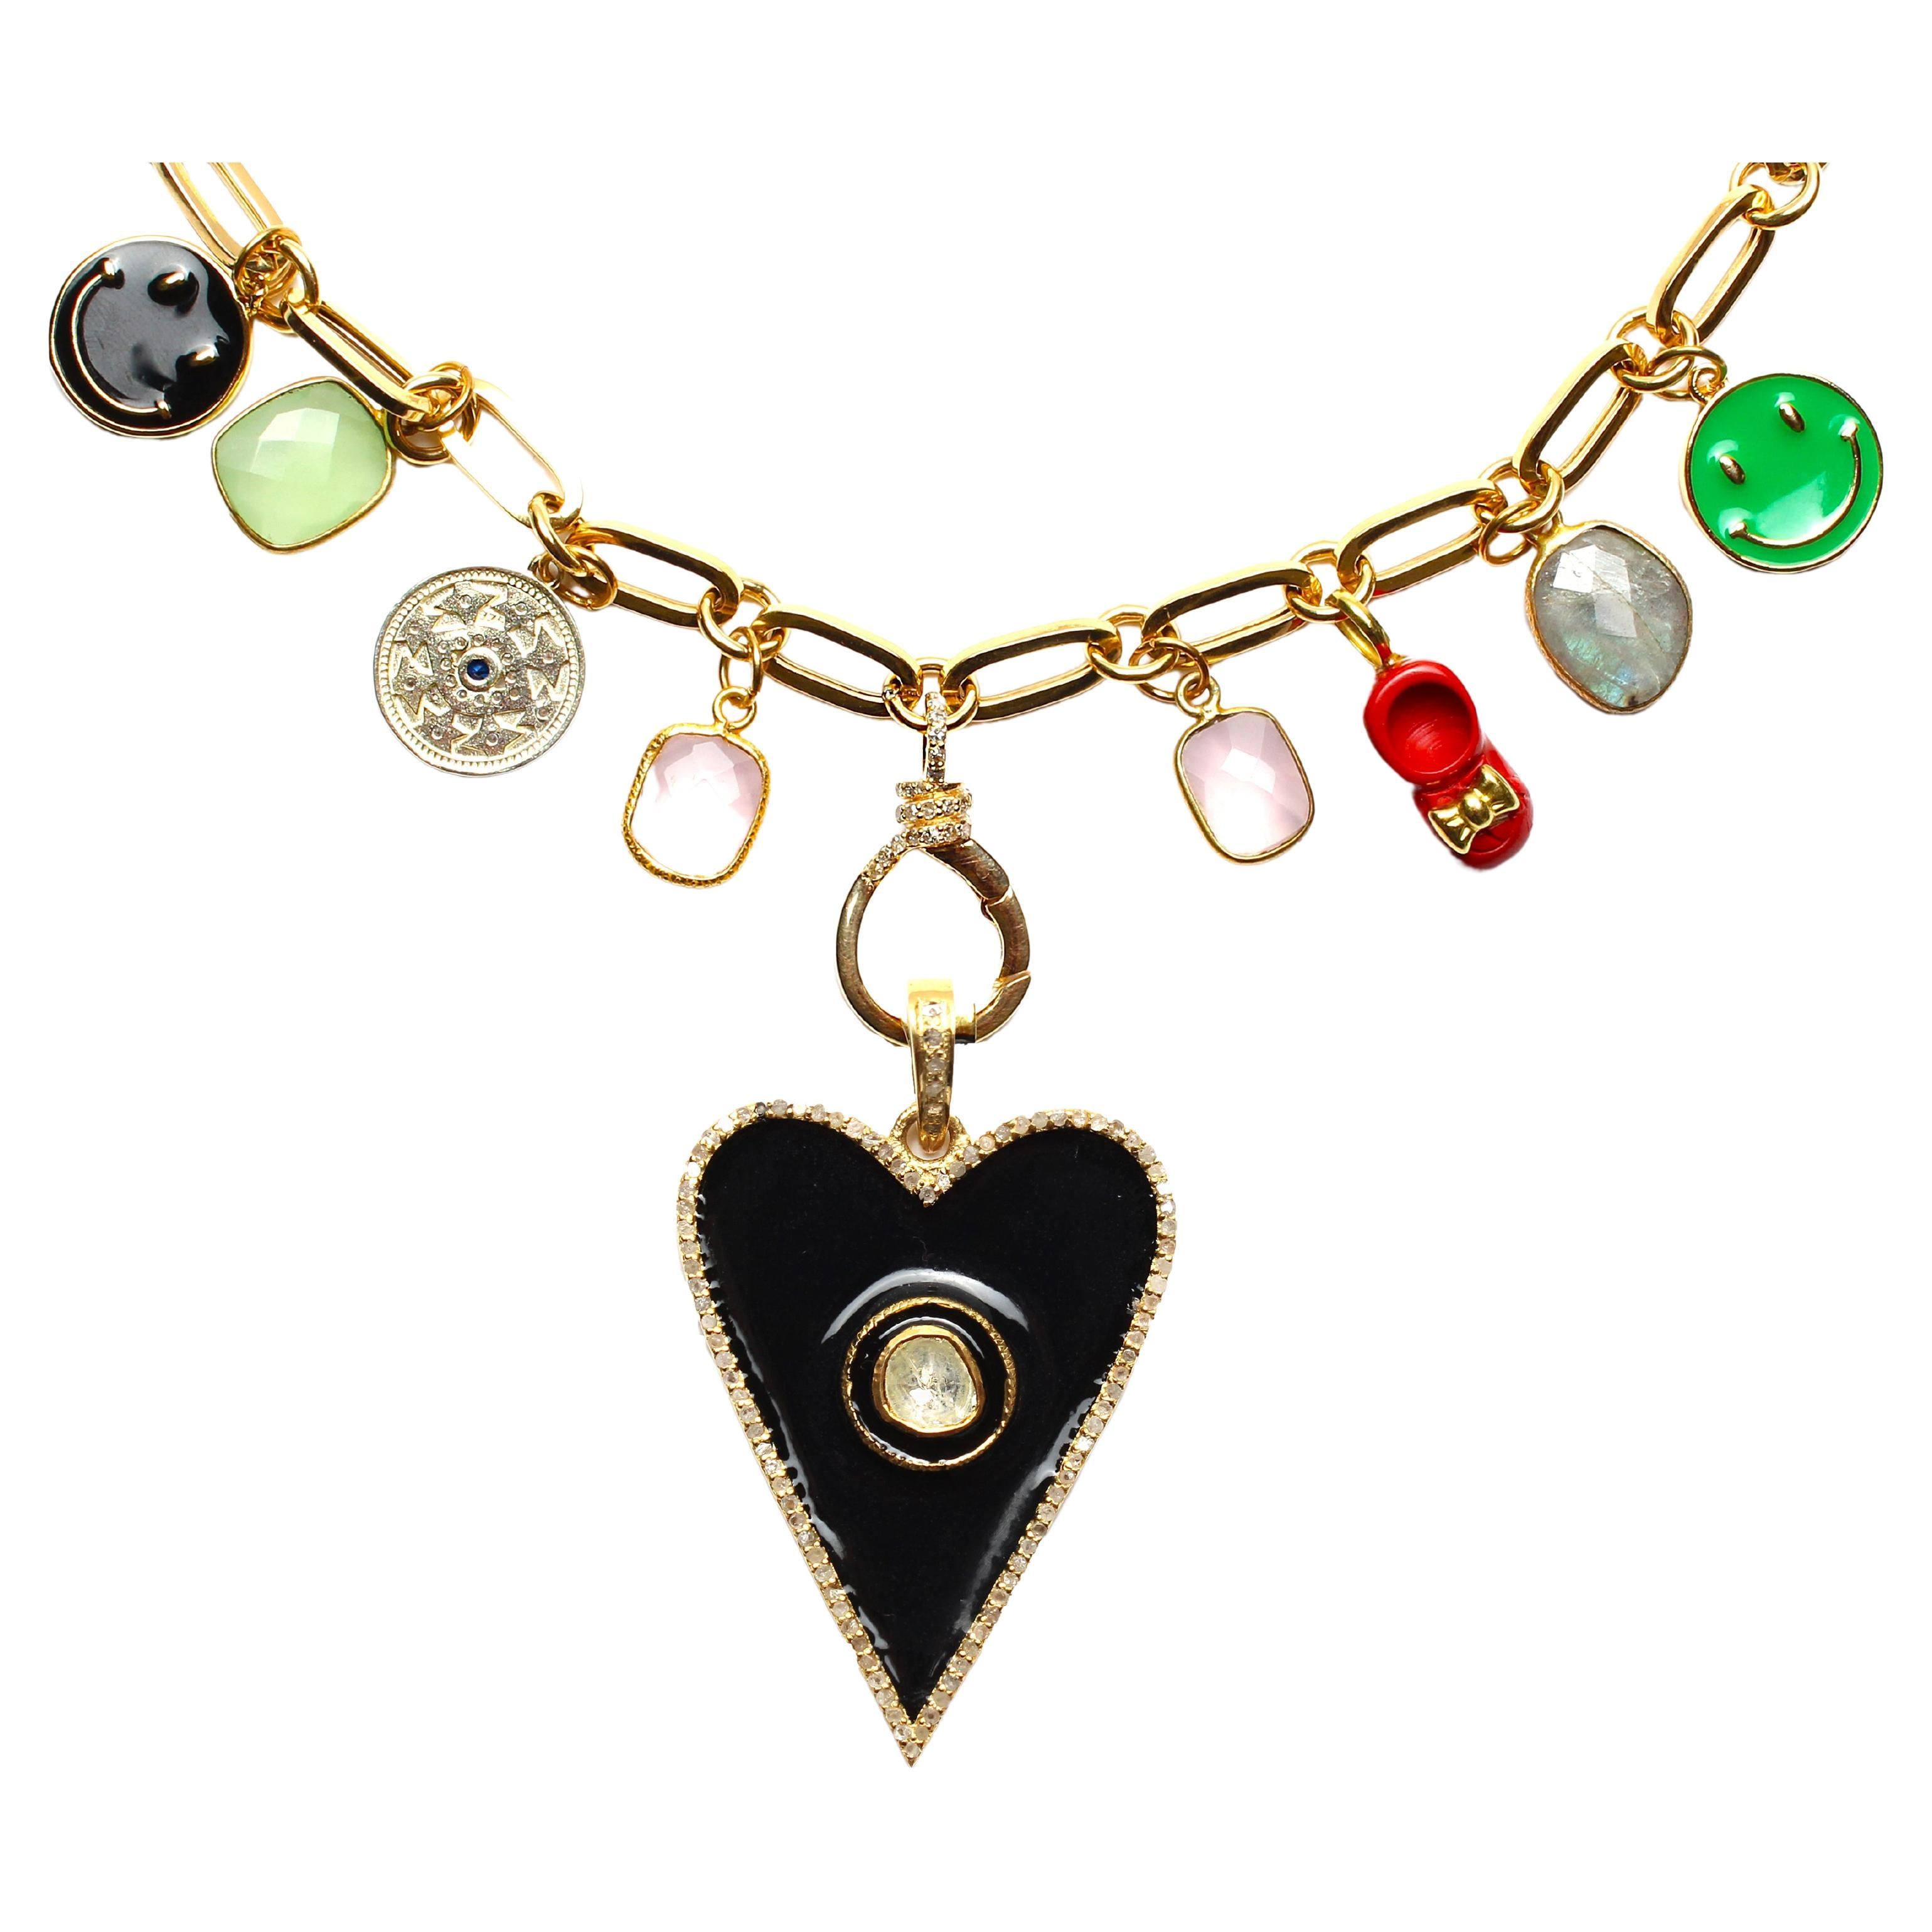 Heart Charm Double Paperclip Chain Bracelet